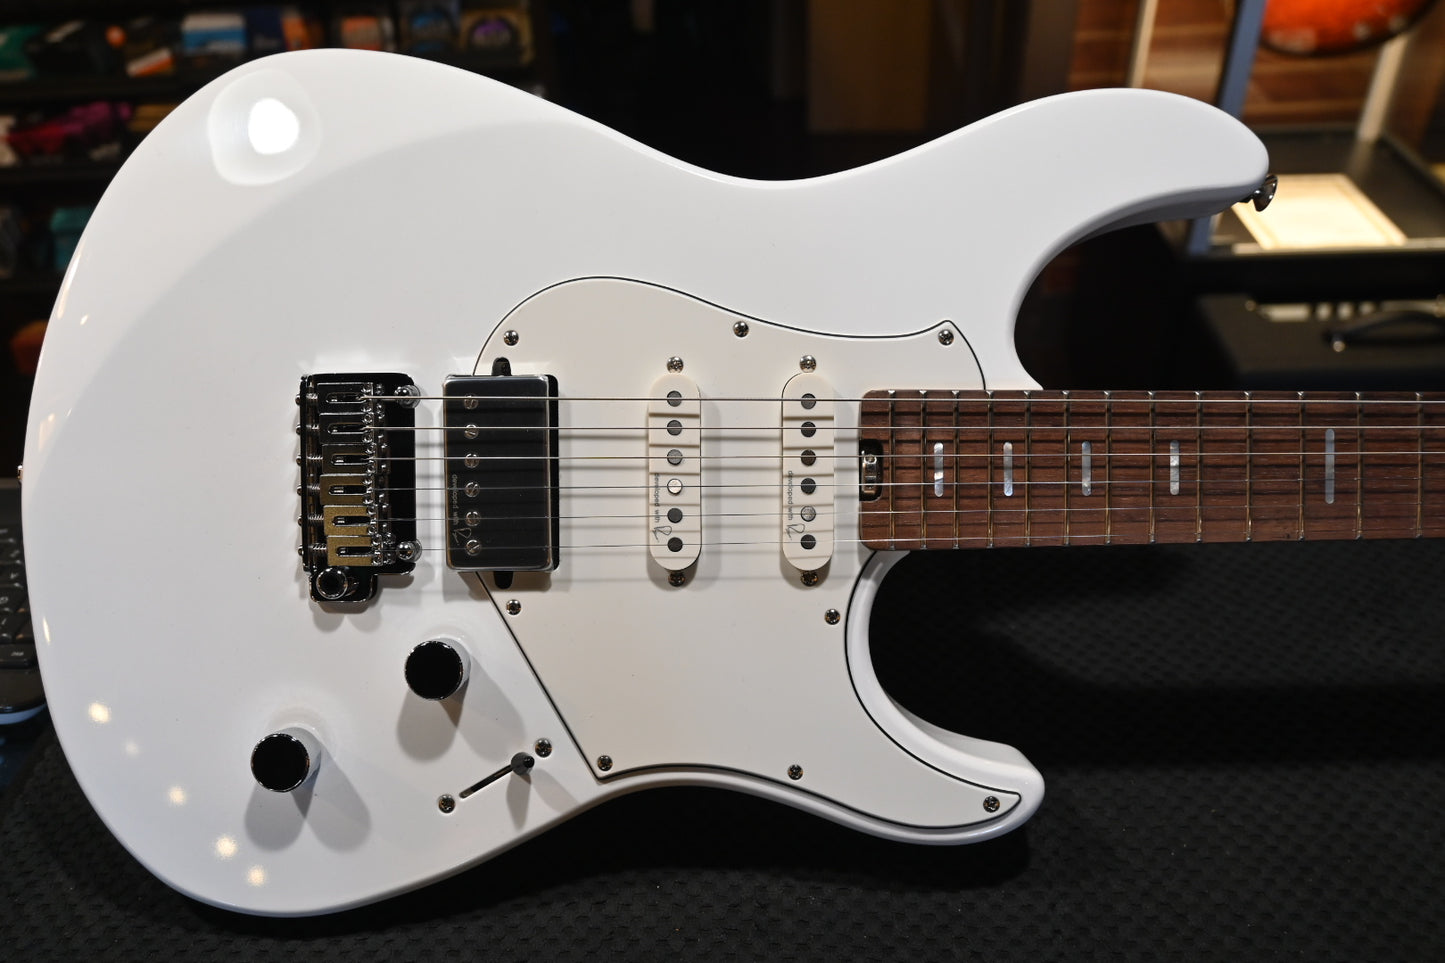 Yamaha PACS+12 Pacifica Standard Plus - Shell White Guitar #3255 - Danville Music